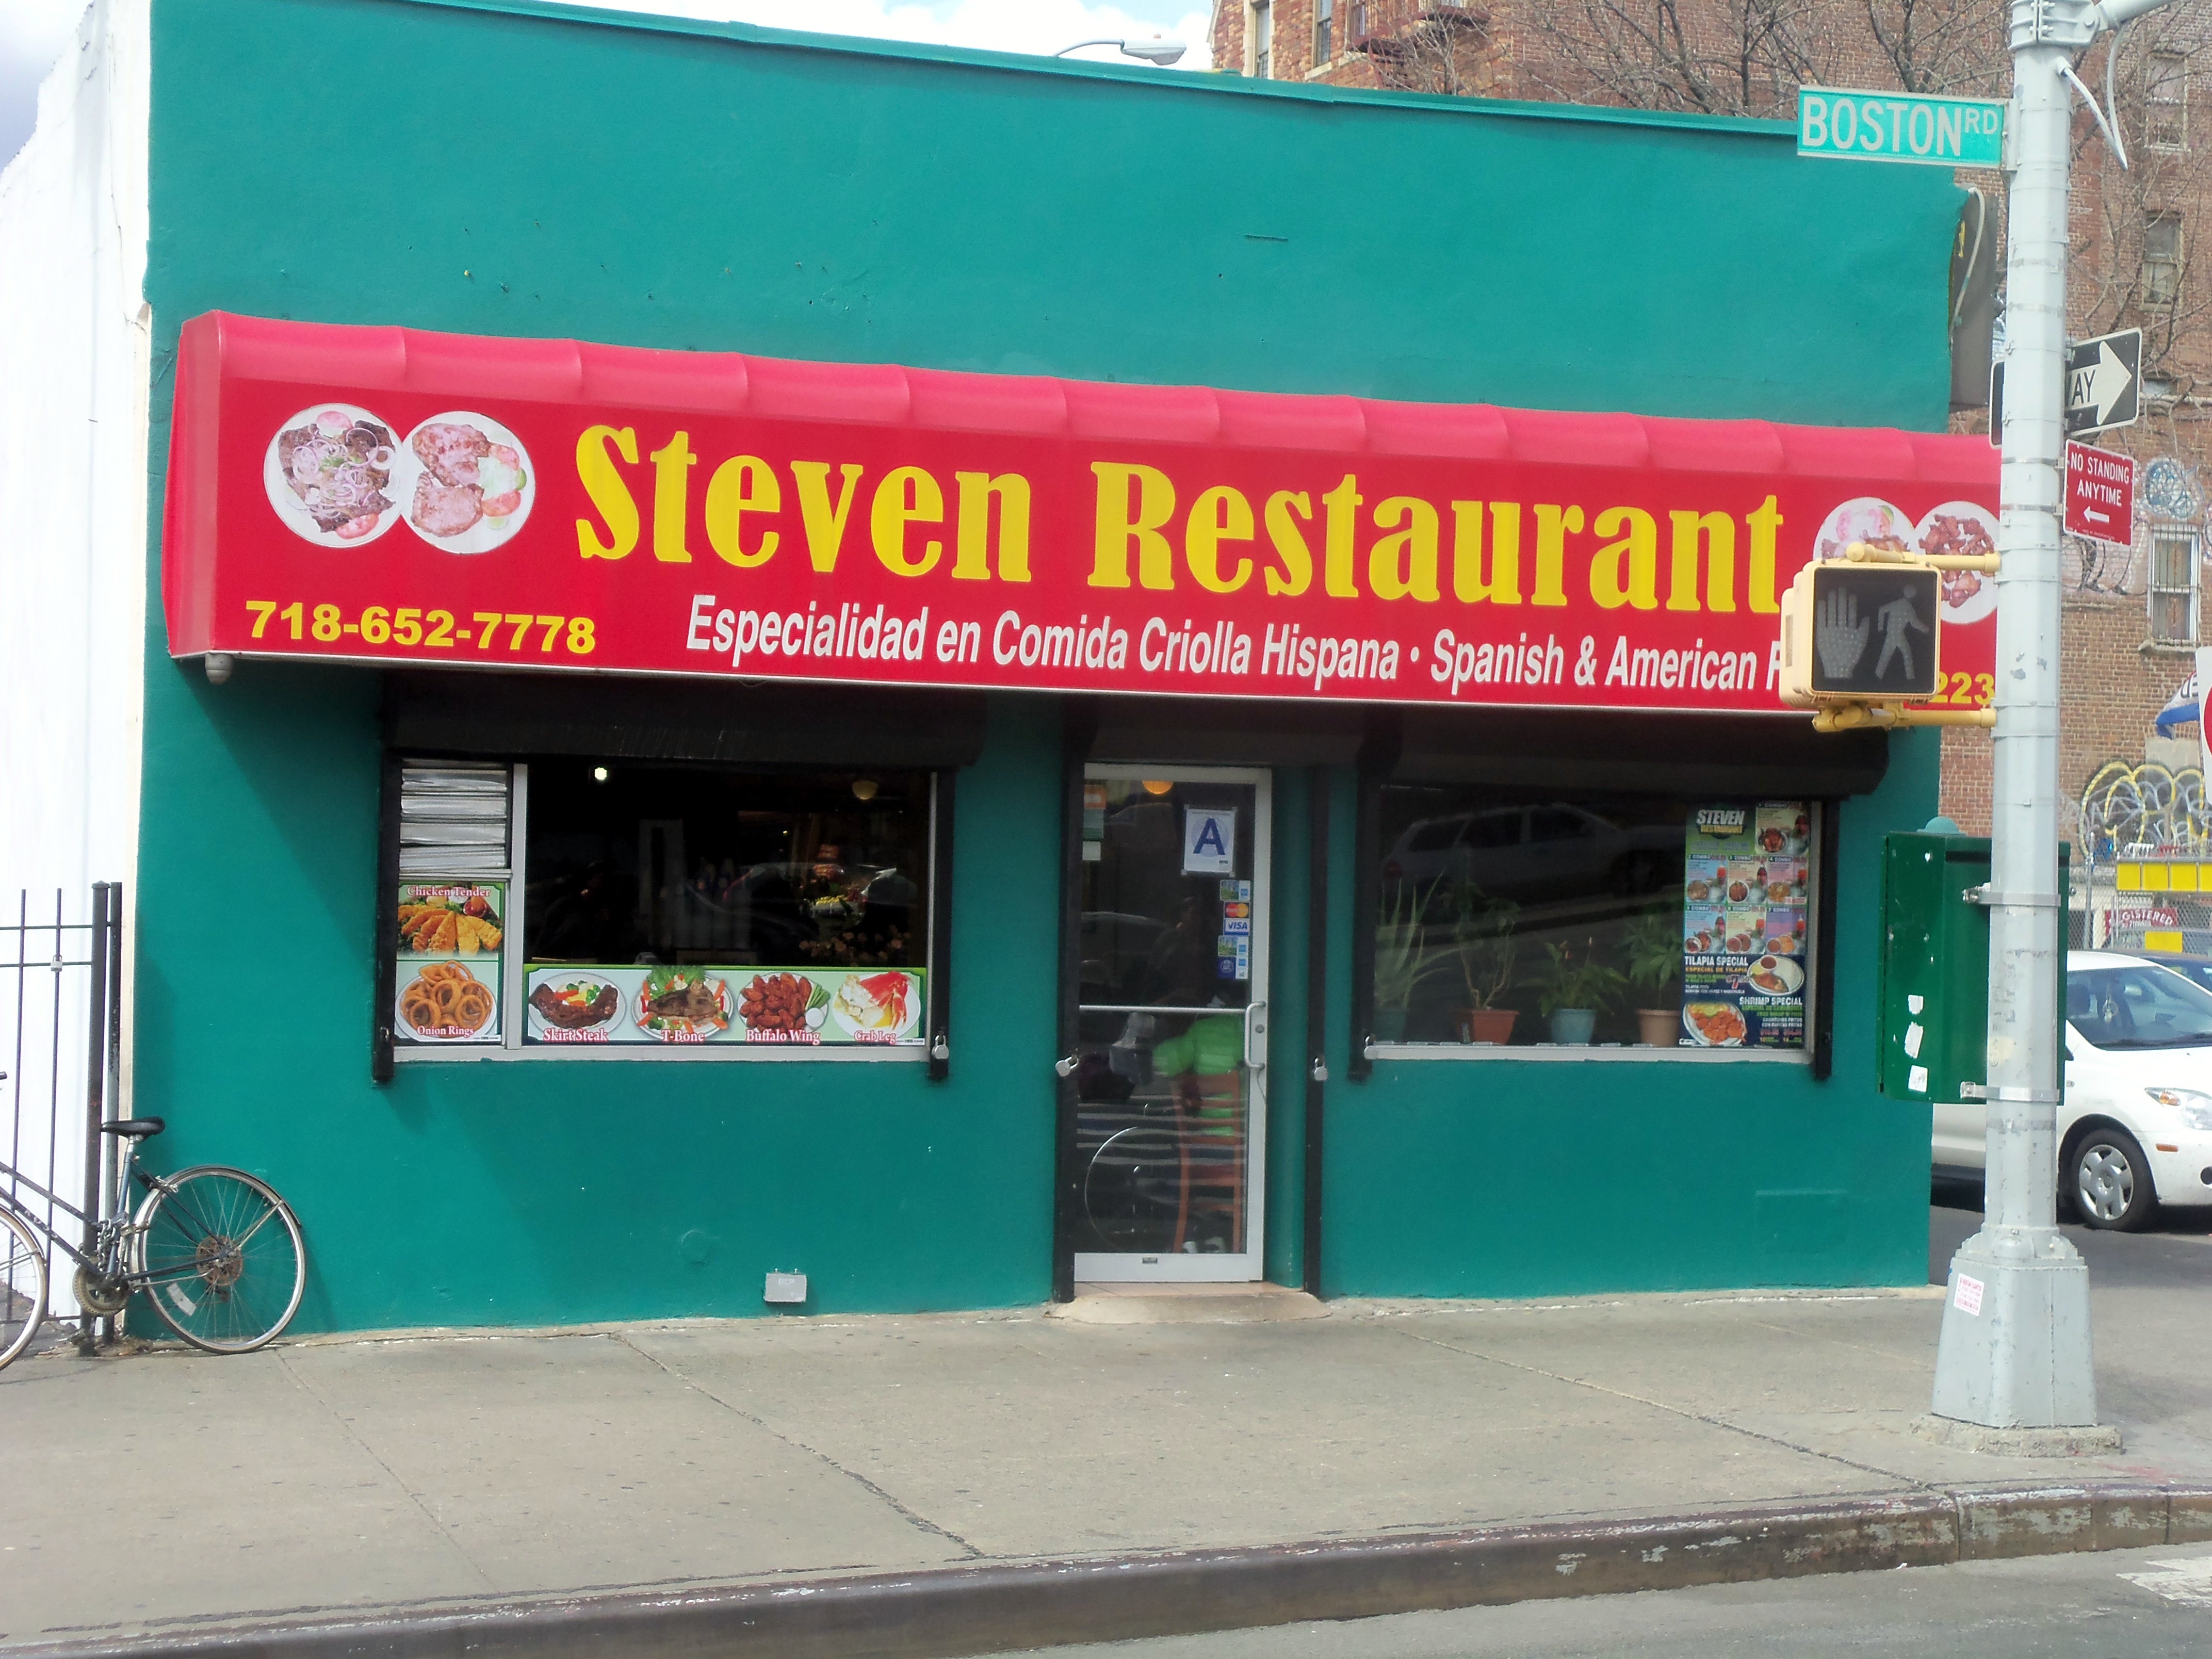 Steven Restaurant, cuchifritos on Boston Rd.